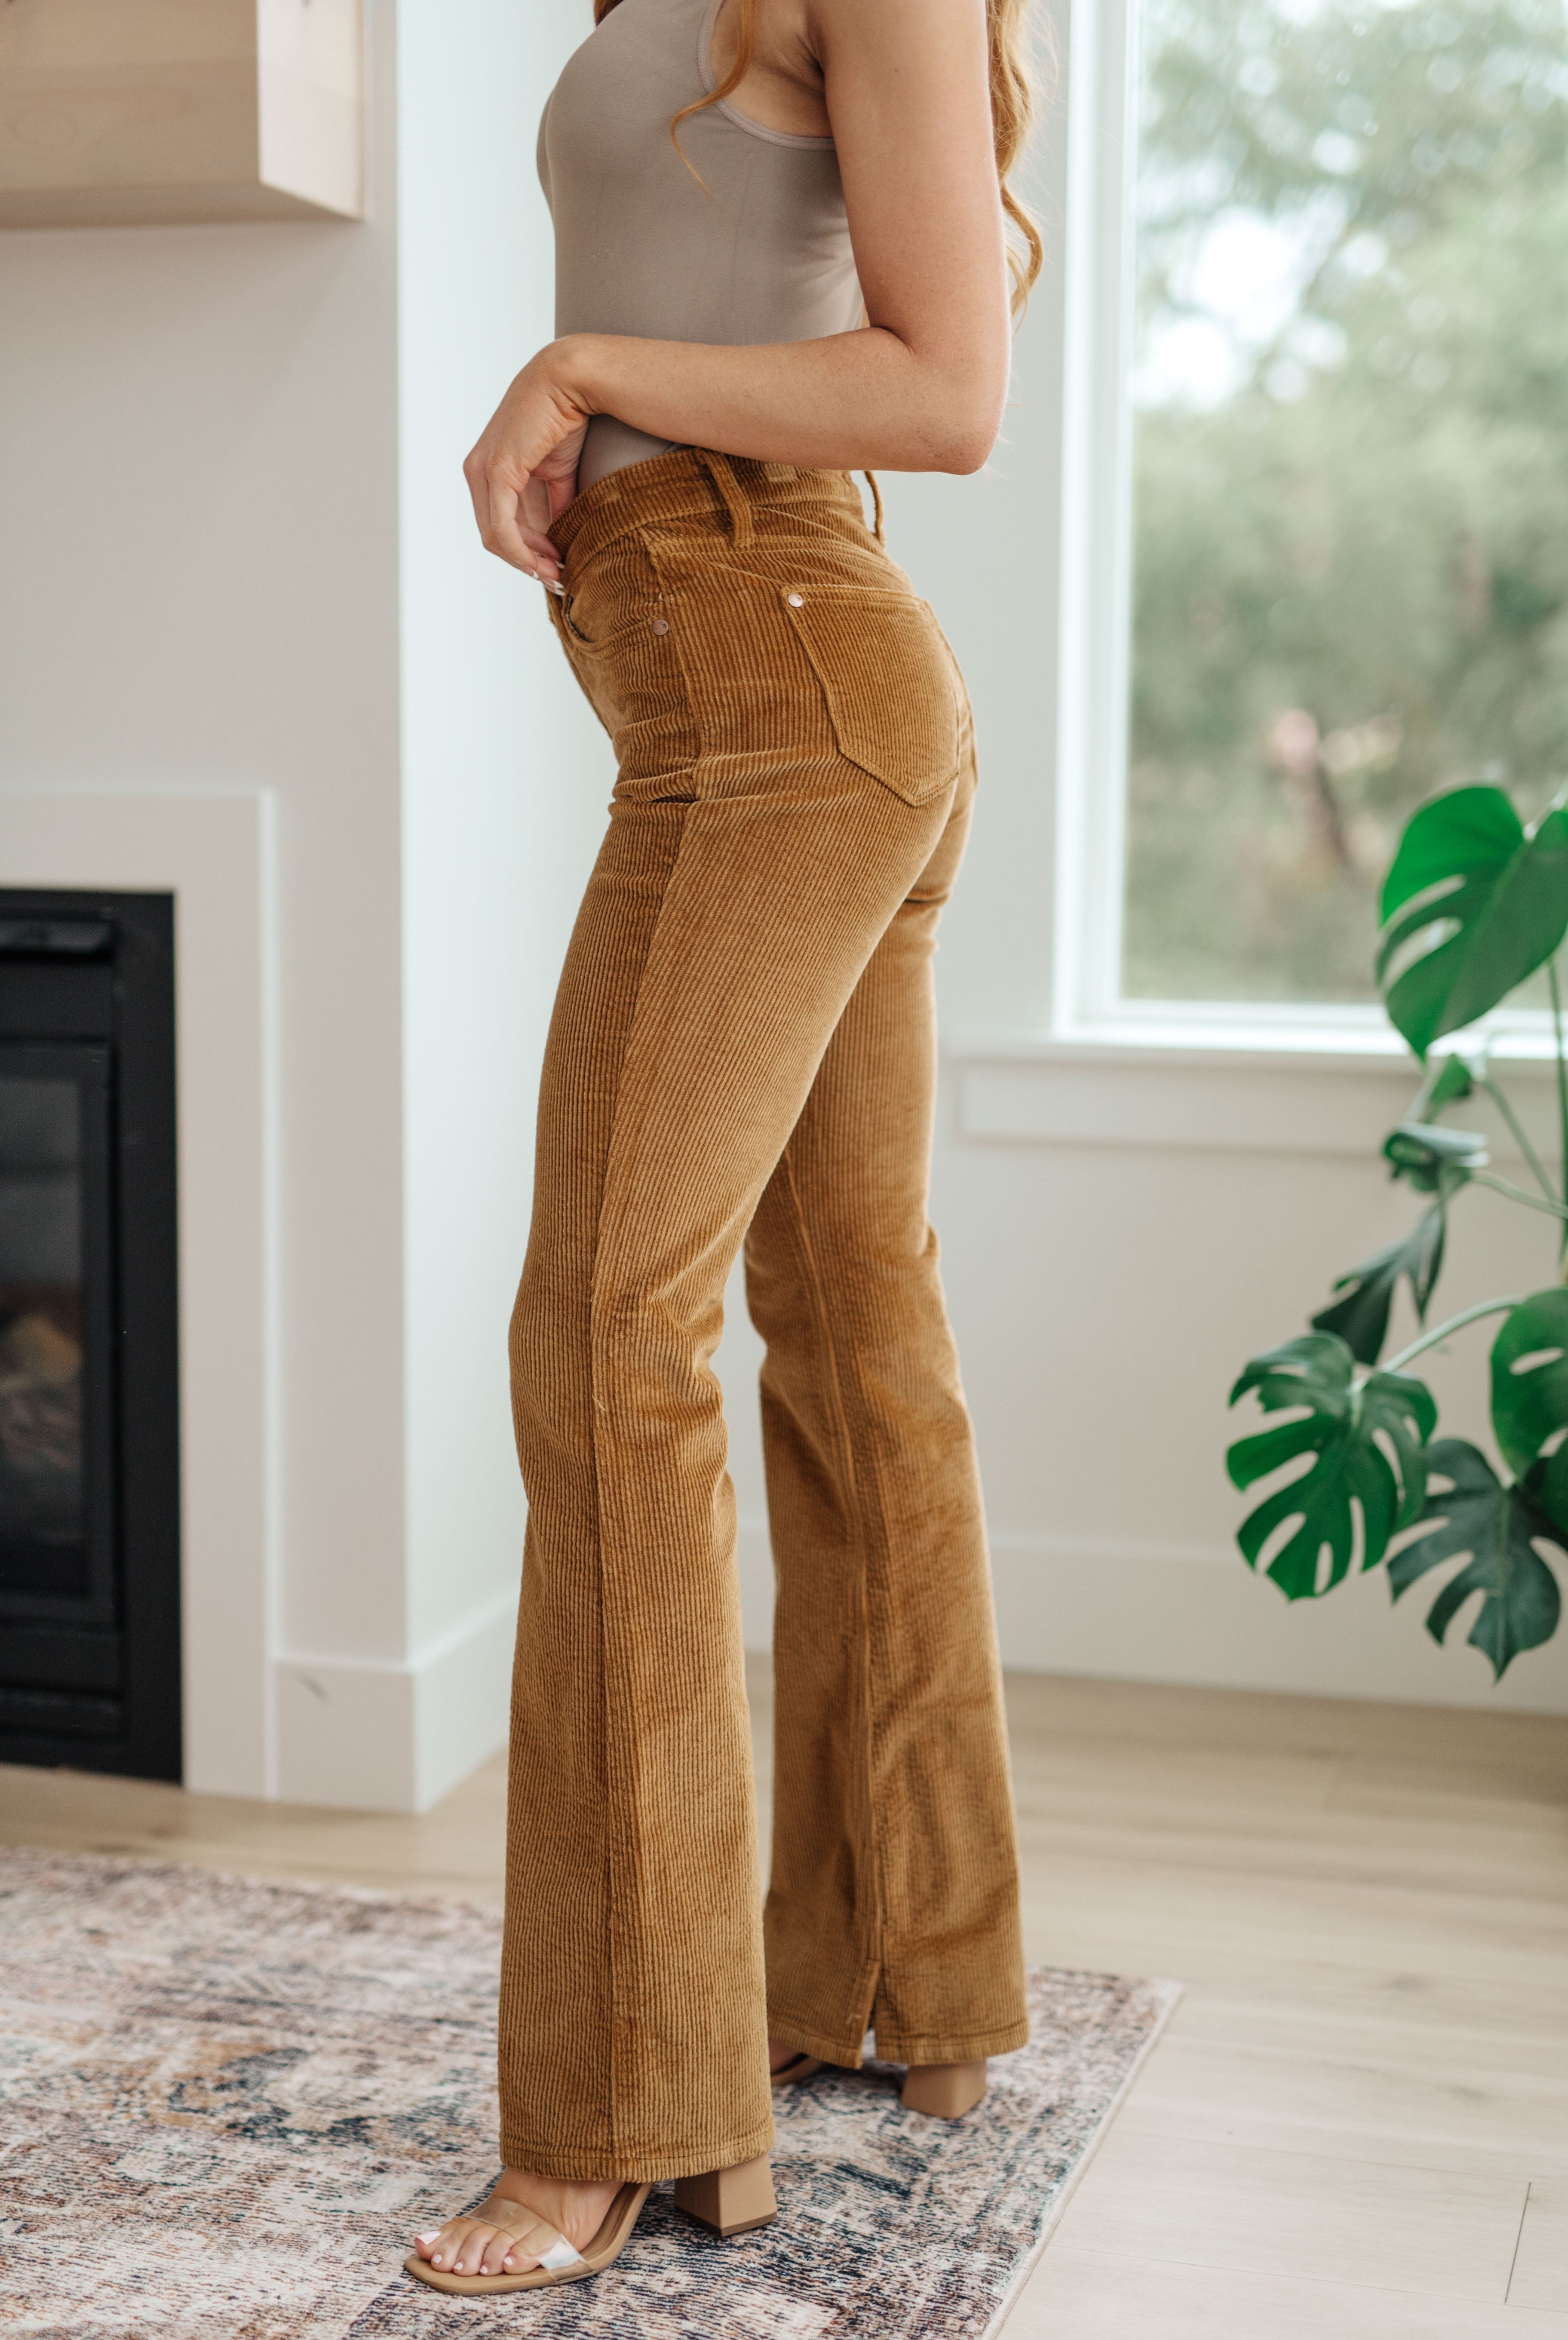 JUDY BLUE Cordelia Bootcut Corduroy Pants in Camel-Jeans-Krush Kandy, Women's Online Fashion Boutique Located in Phoenix, Arizona (Scottsdale Area)